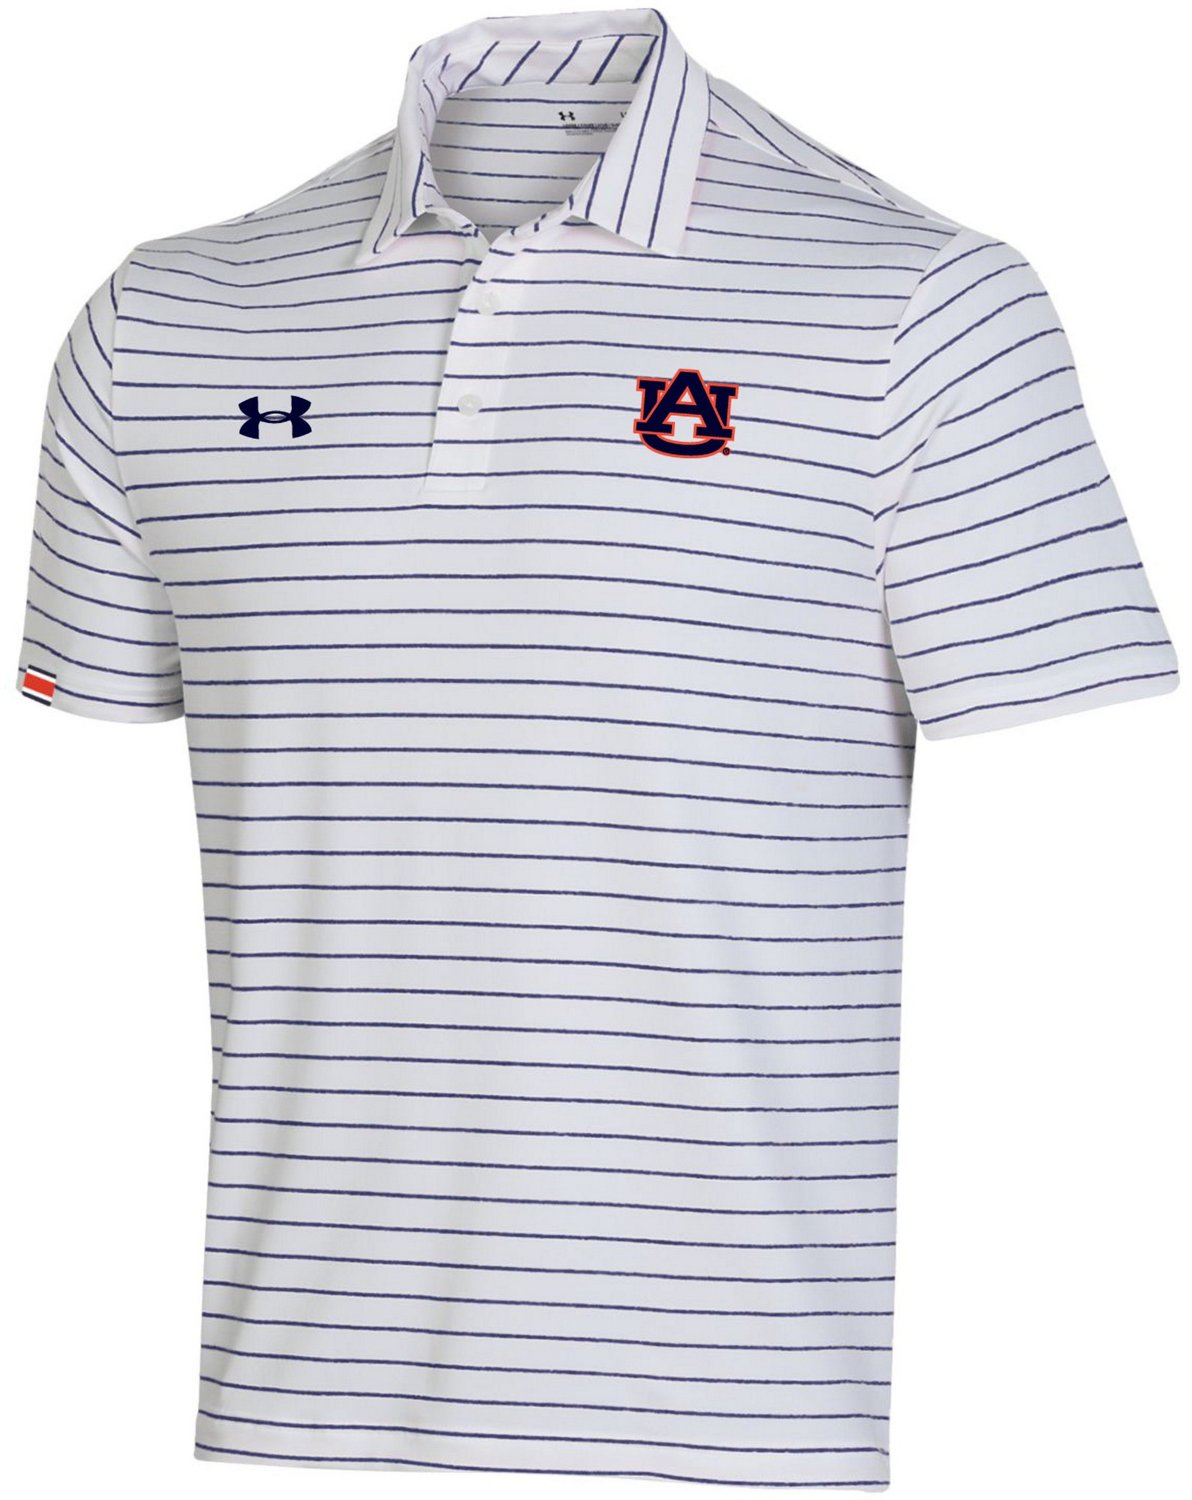 Under Armour Men's Auburn University Early Release Sideline Polo Shirt